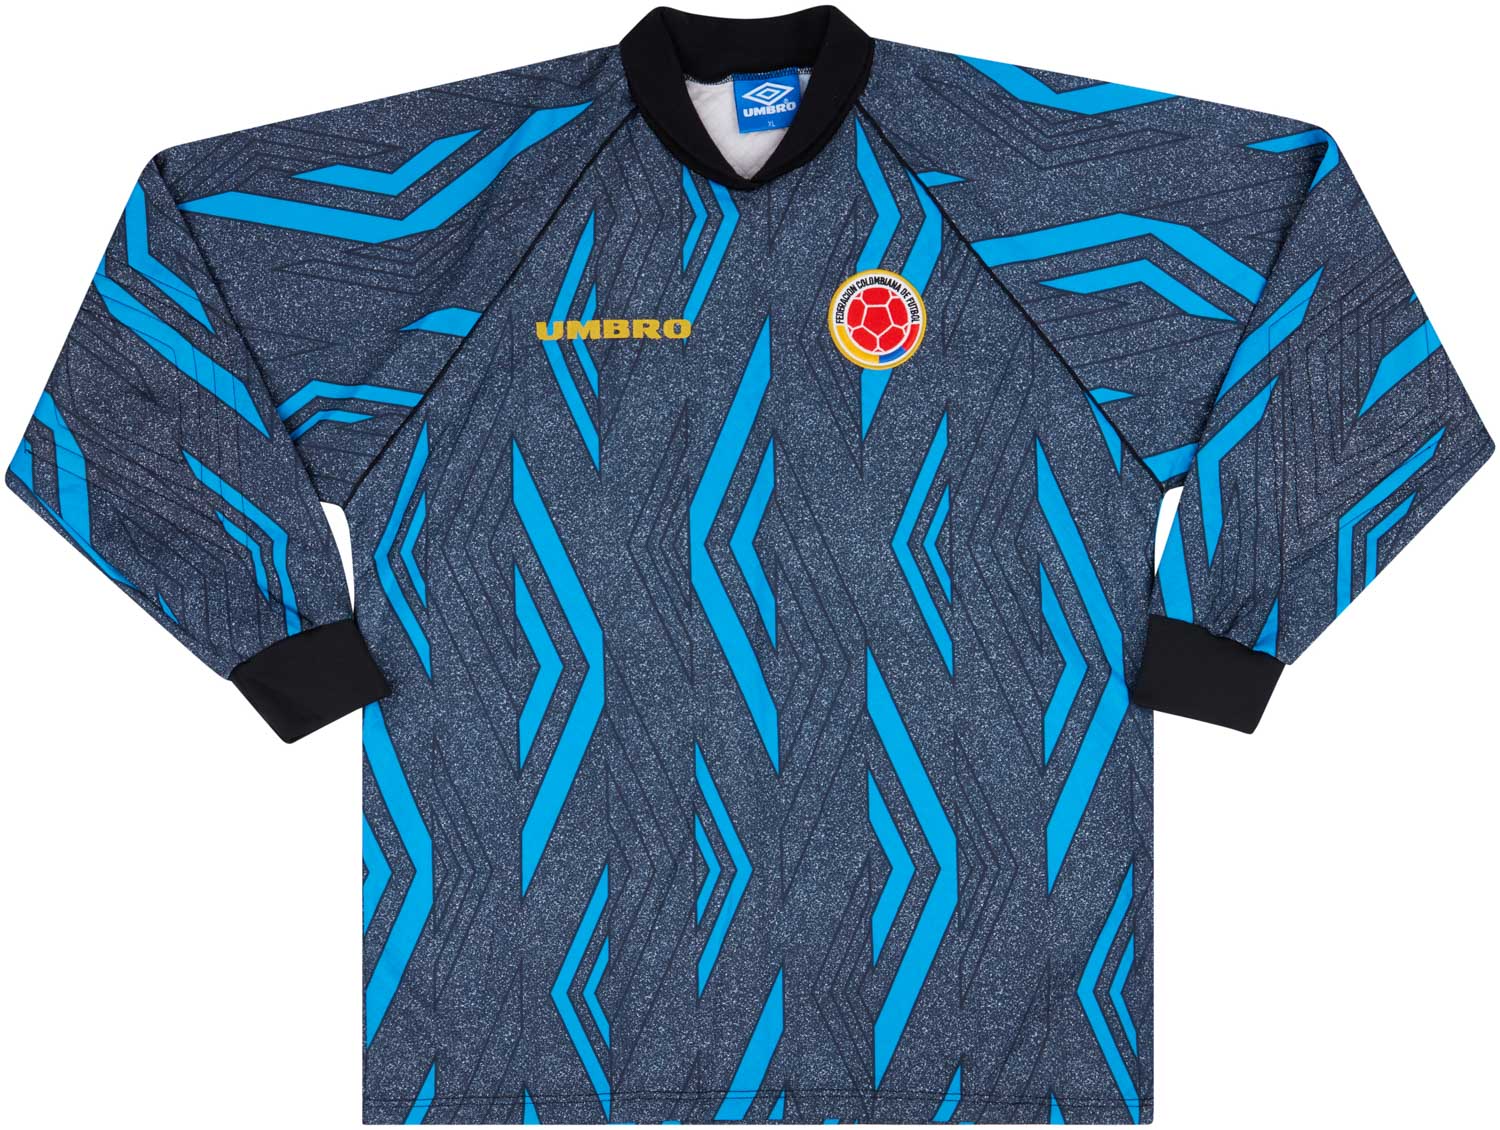 1994 Colombia Match Issue GK Shirt #12 (Mondragón) v N. Republic of Ireland